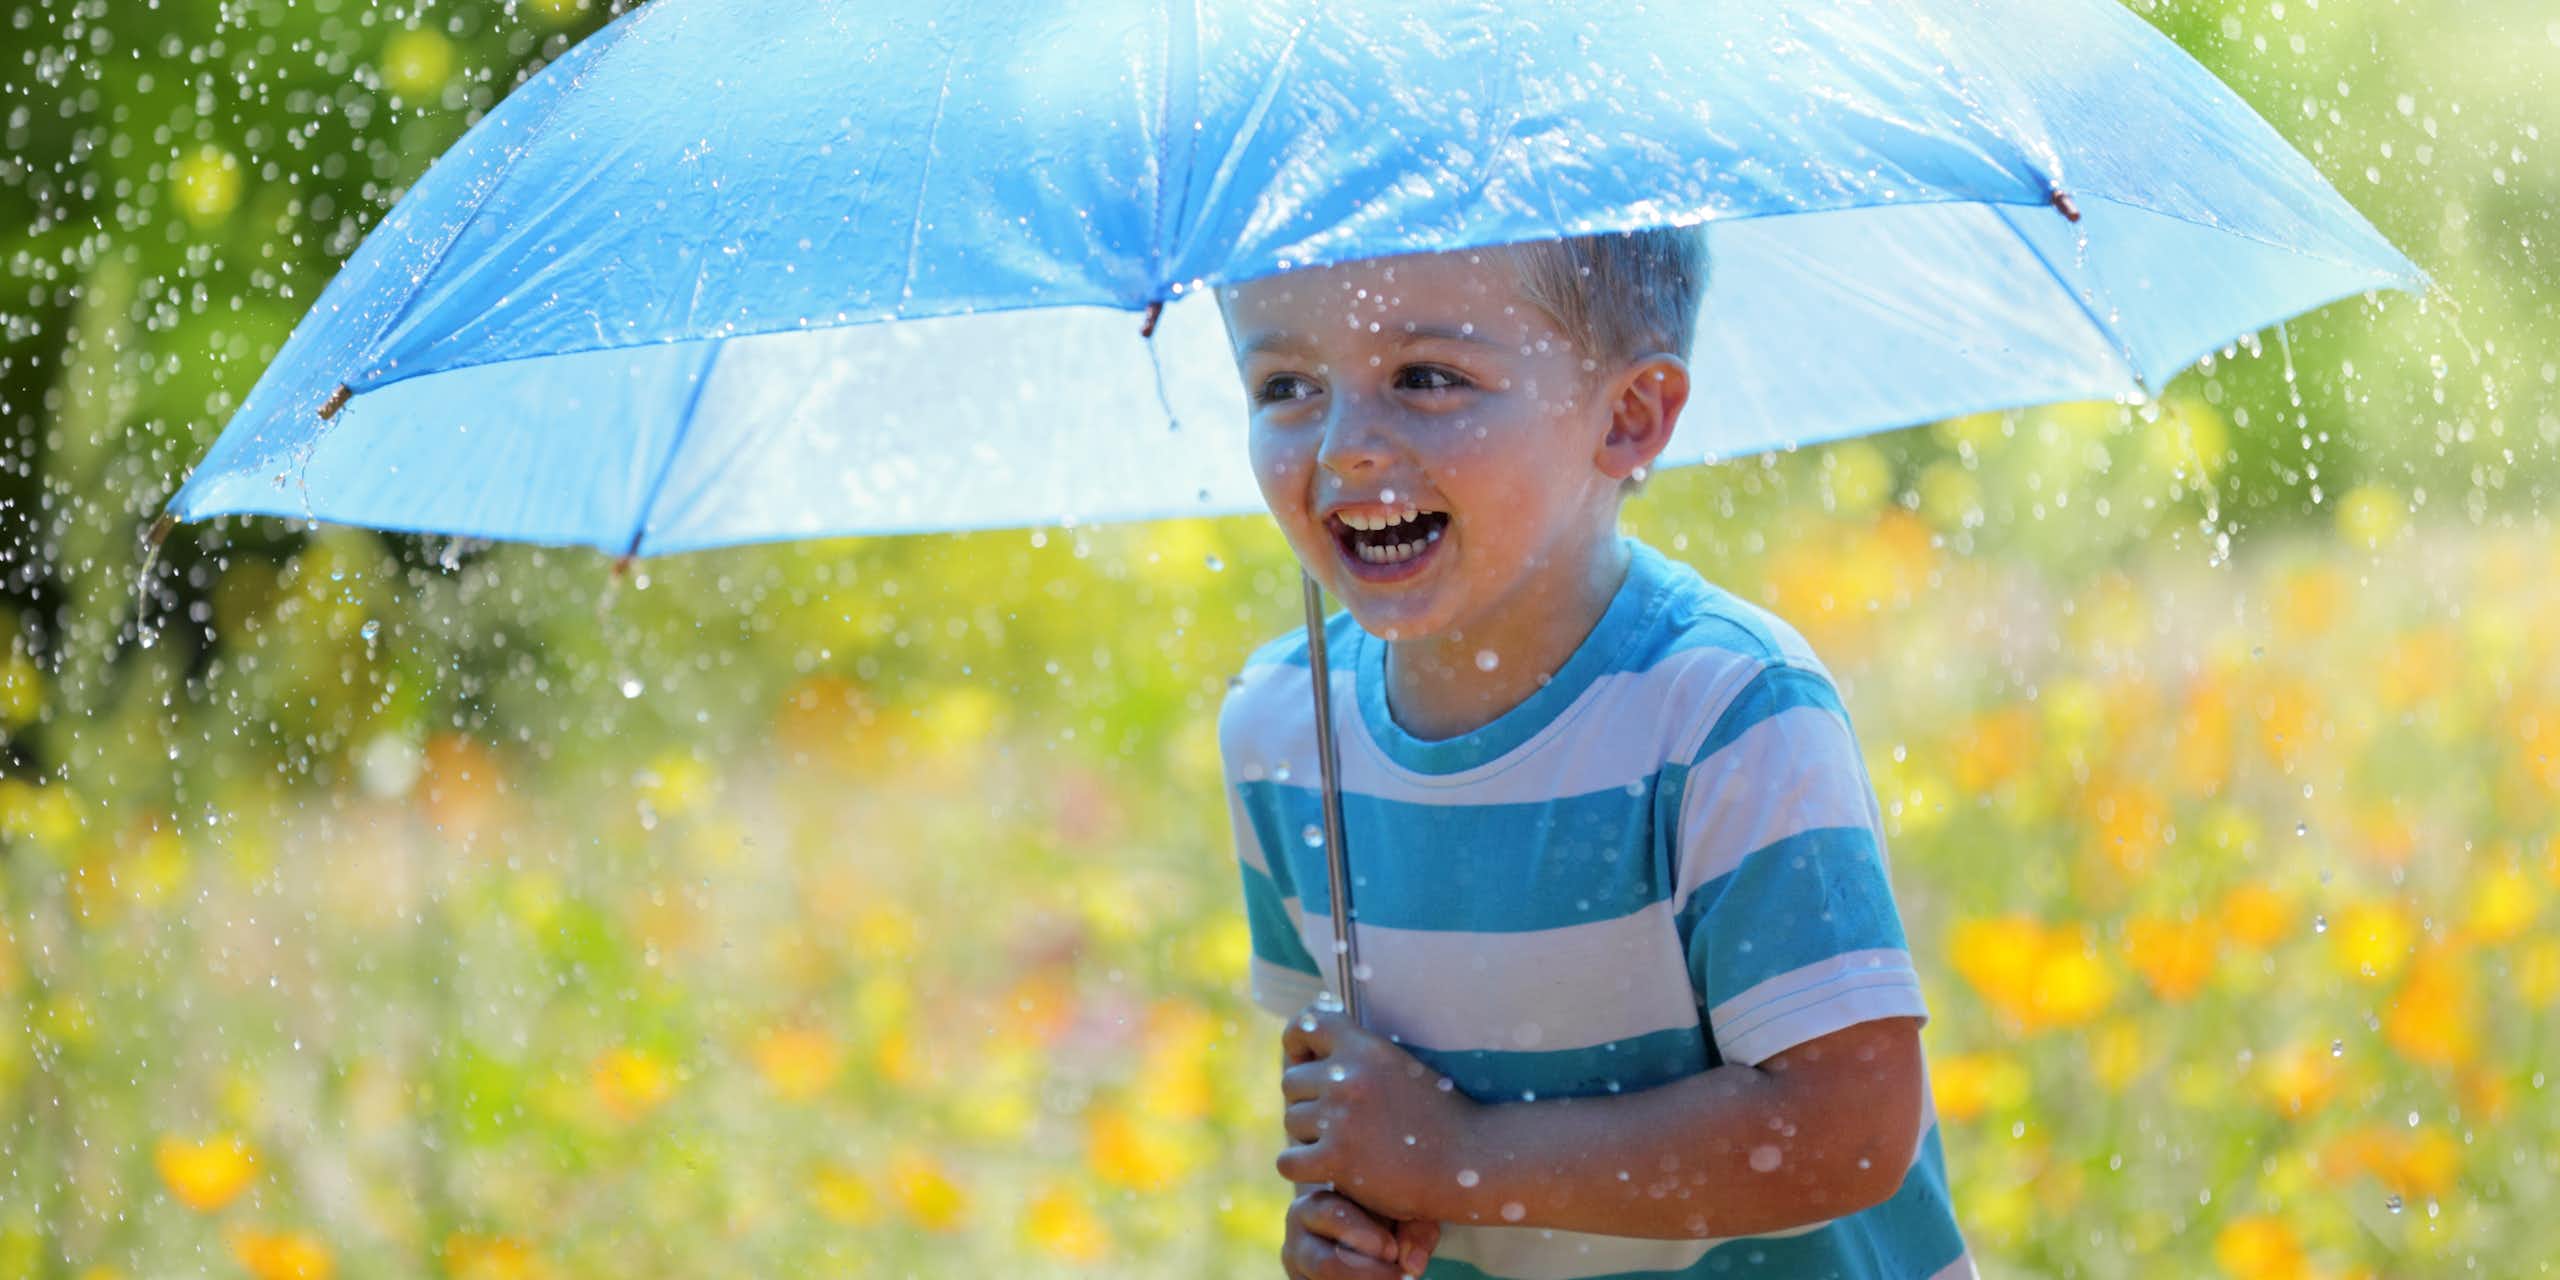 Boy holds umbrella in rain